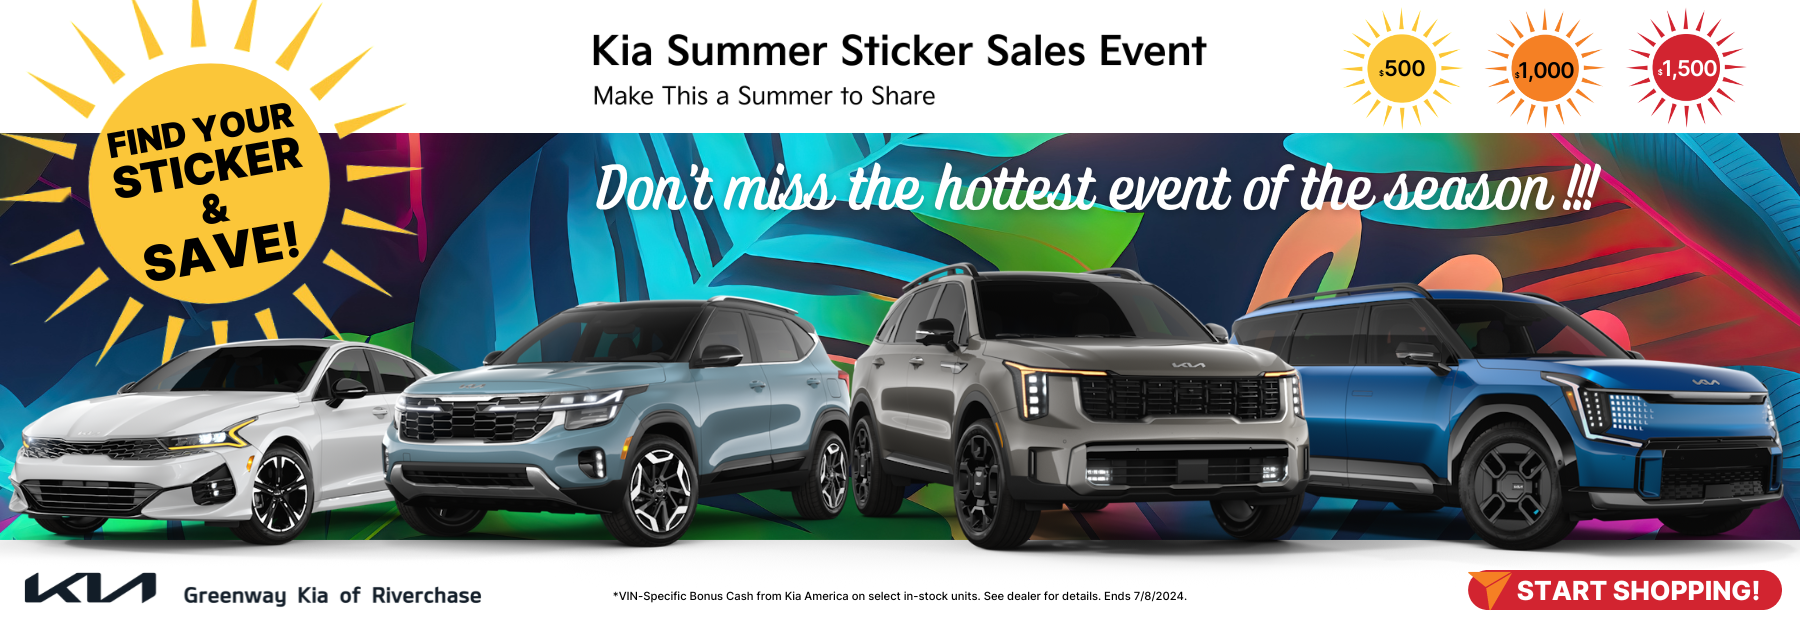 Kia Summer Sticker Sales Event